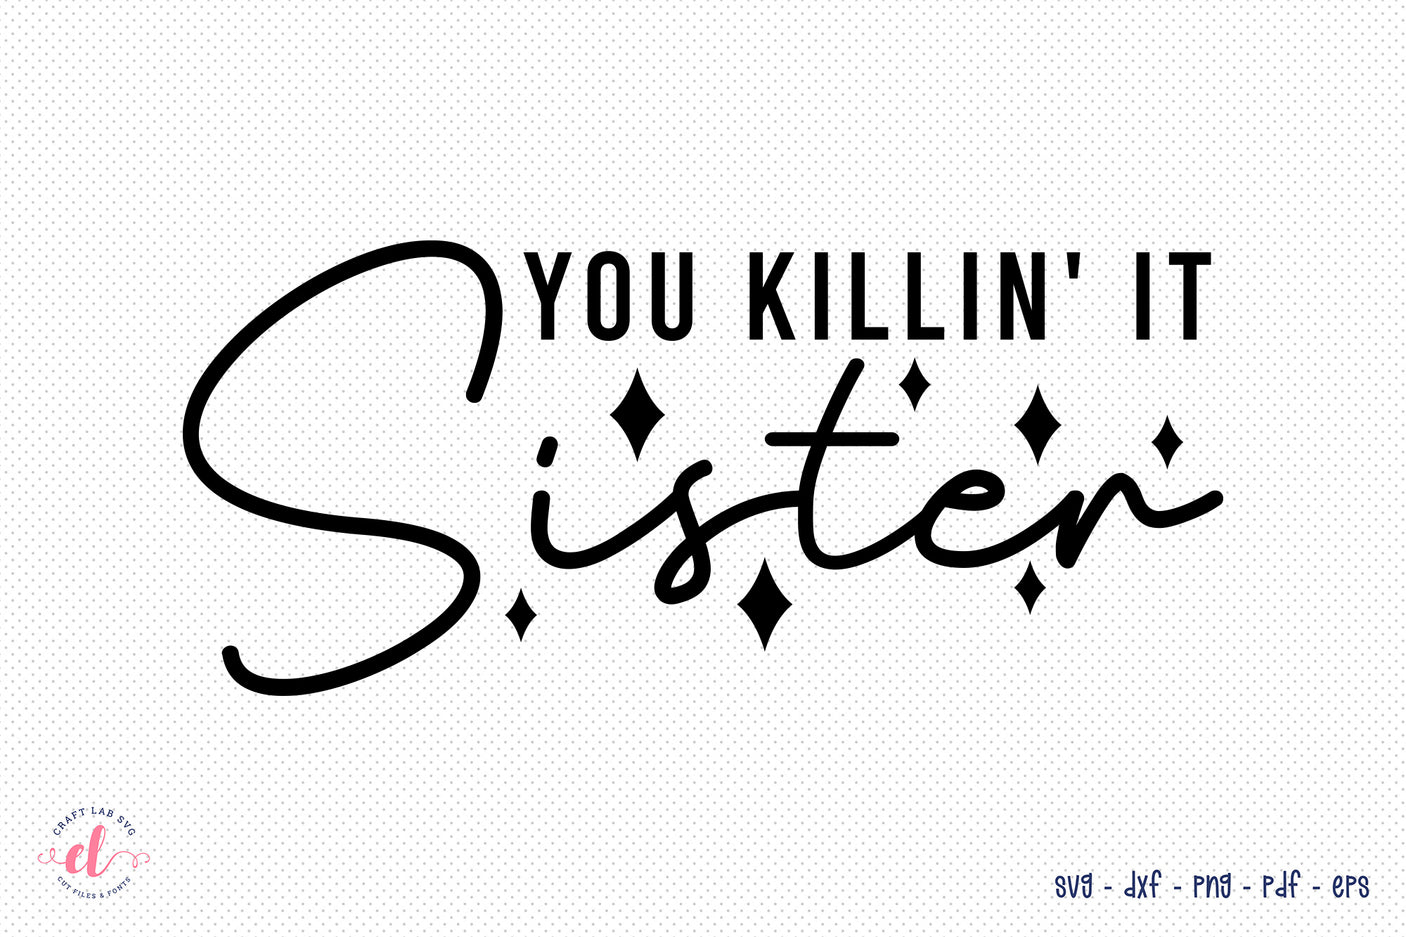 Girl Power SVG | You Killin It Sister SVG